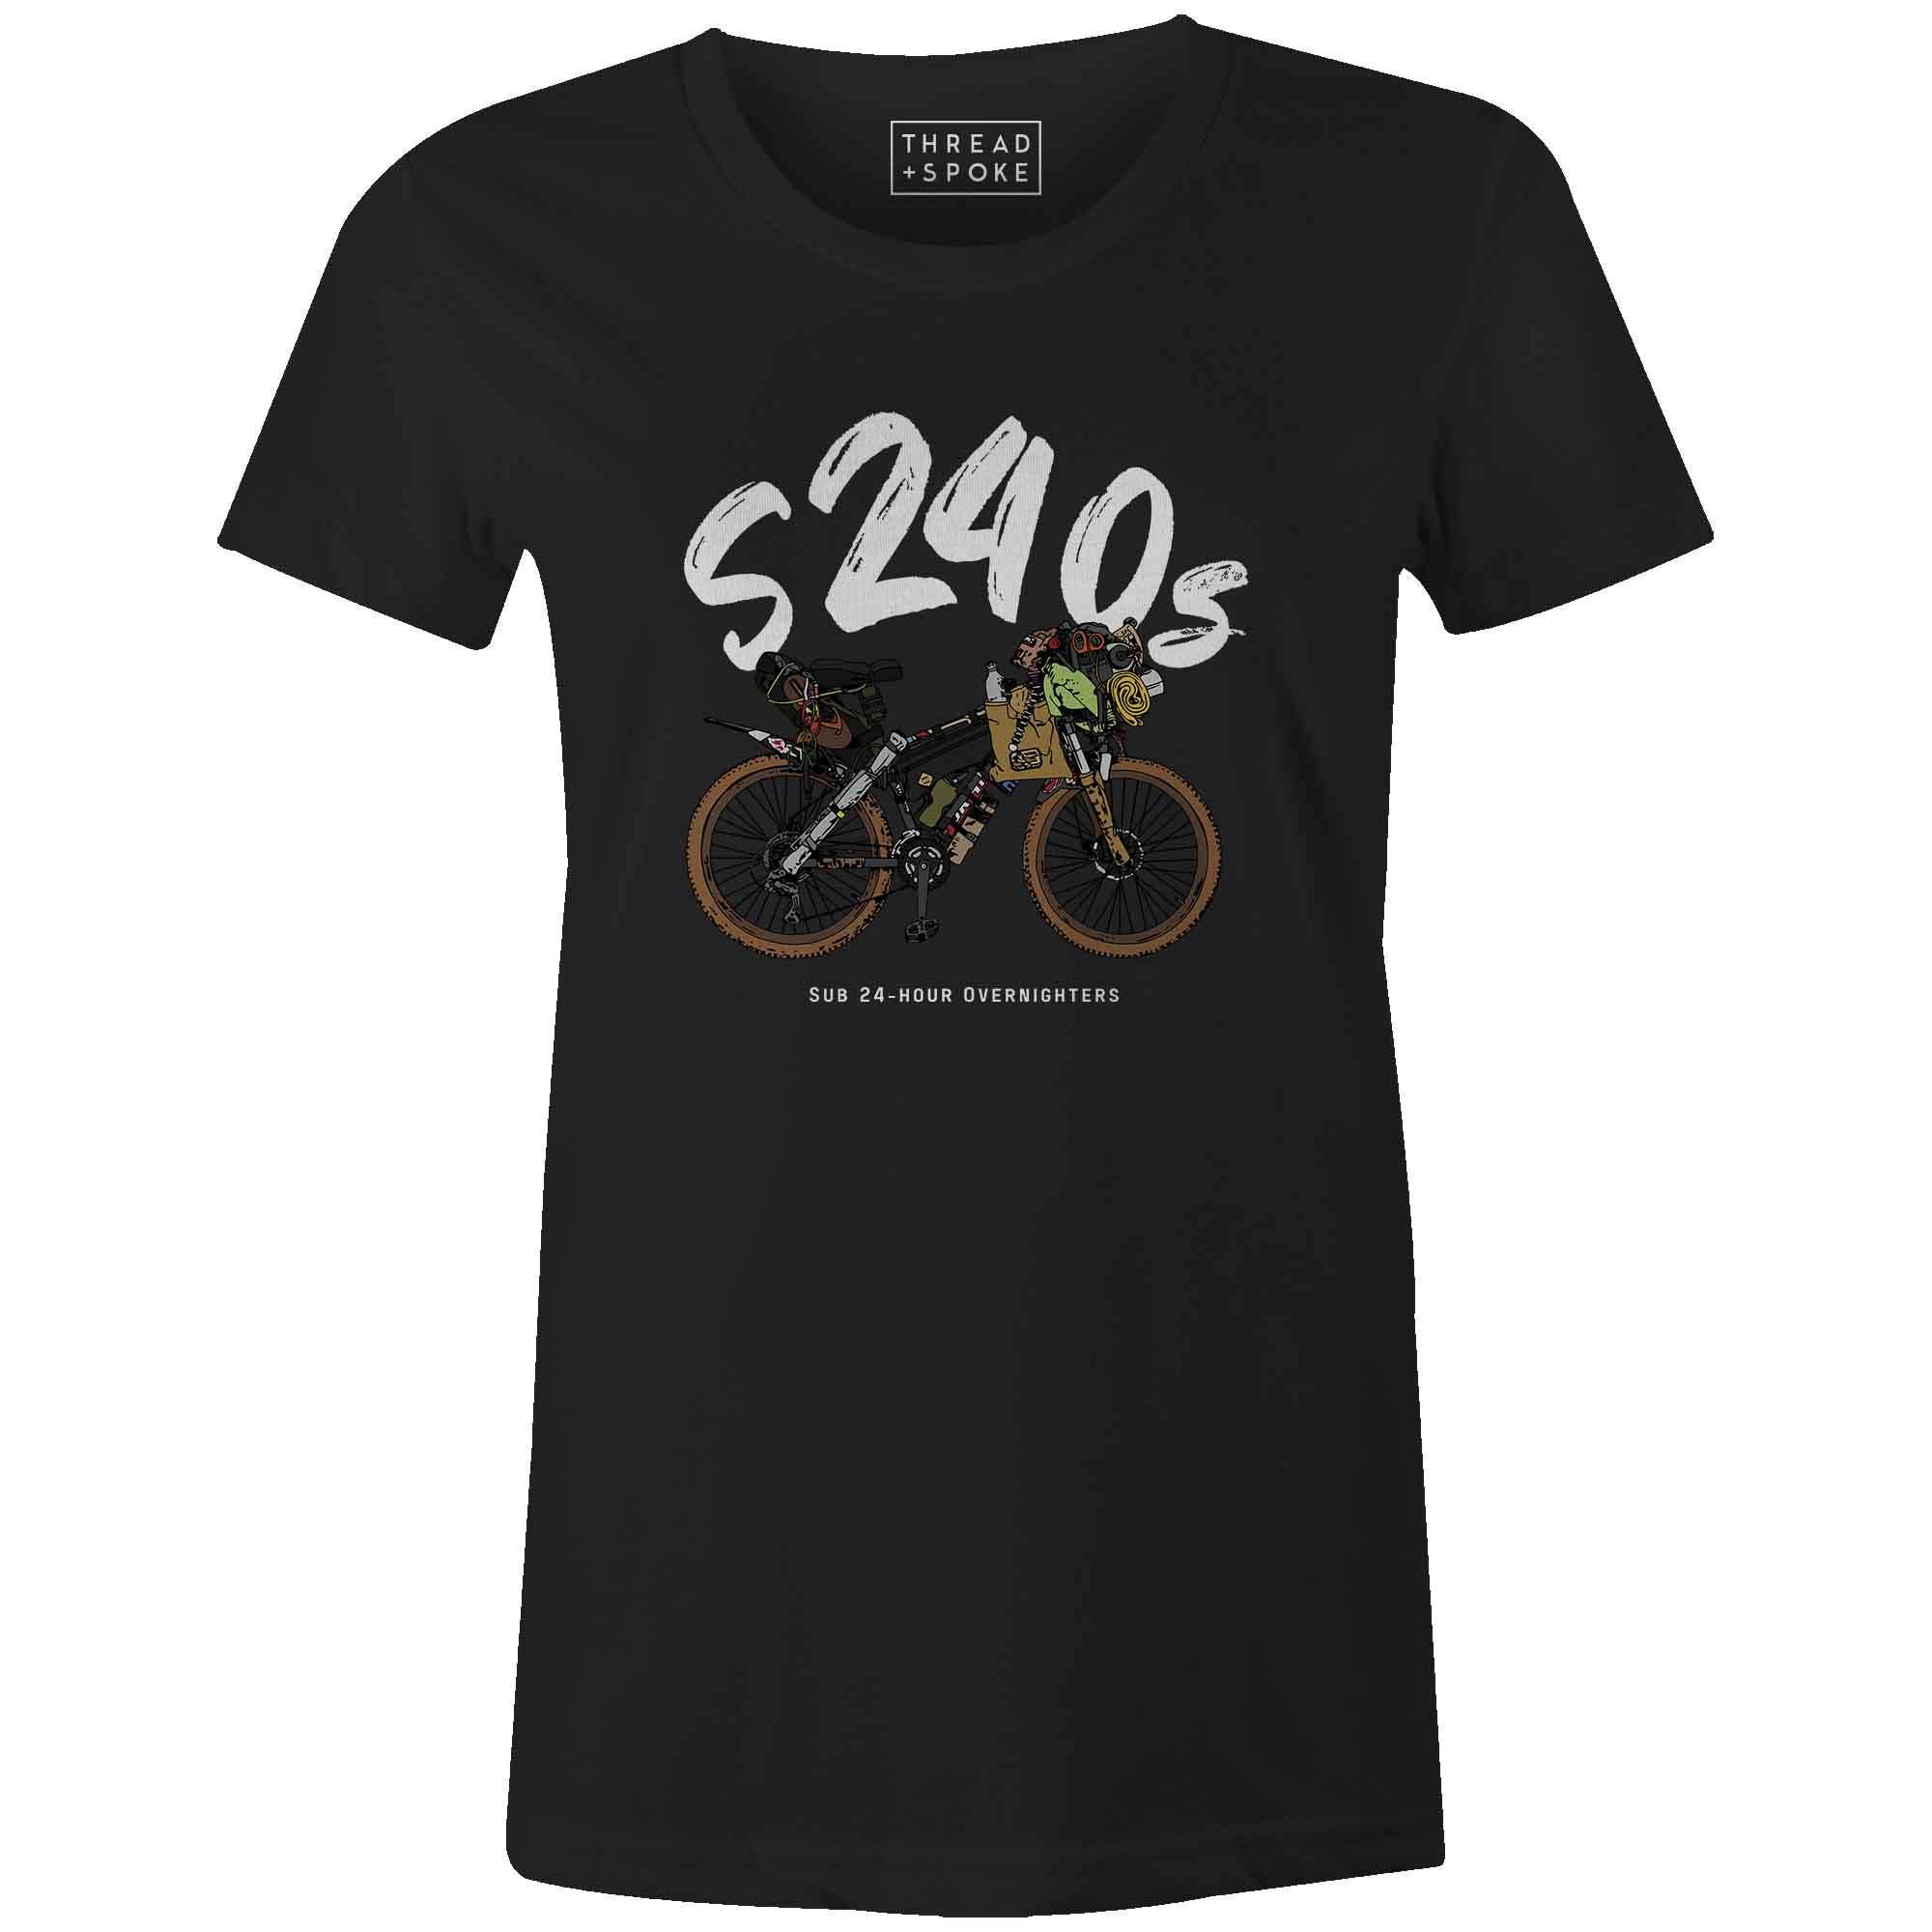 Women's T-shirt - S240s